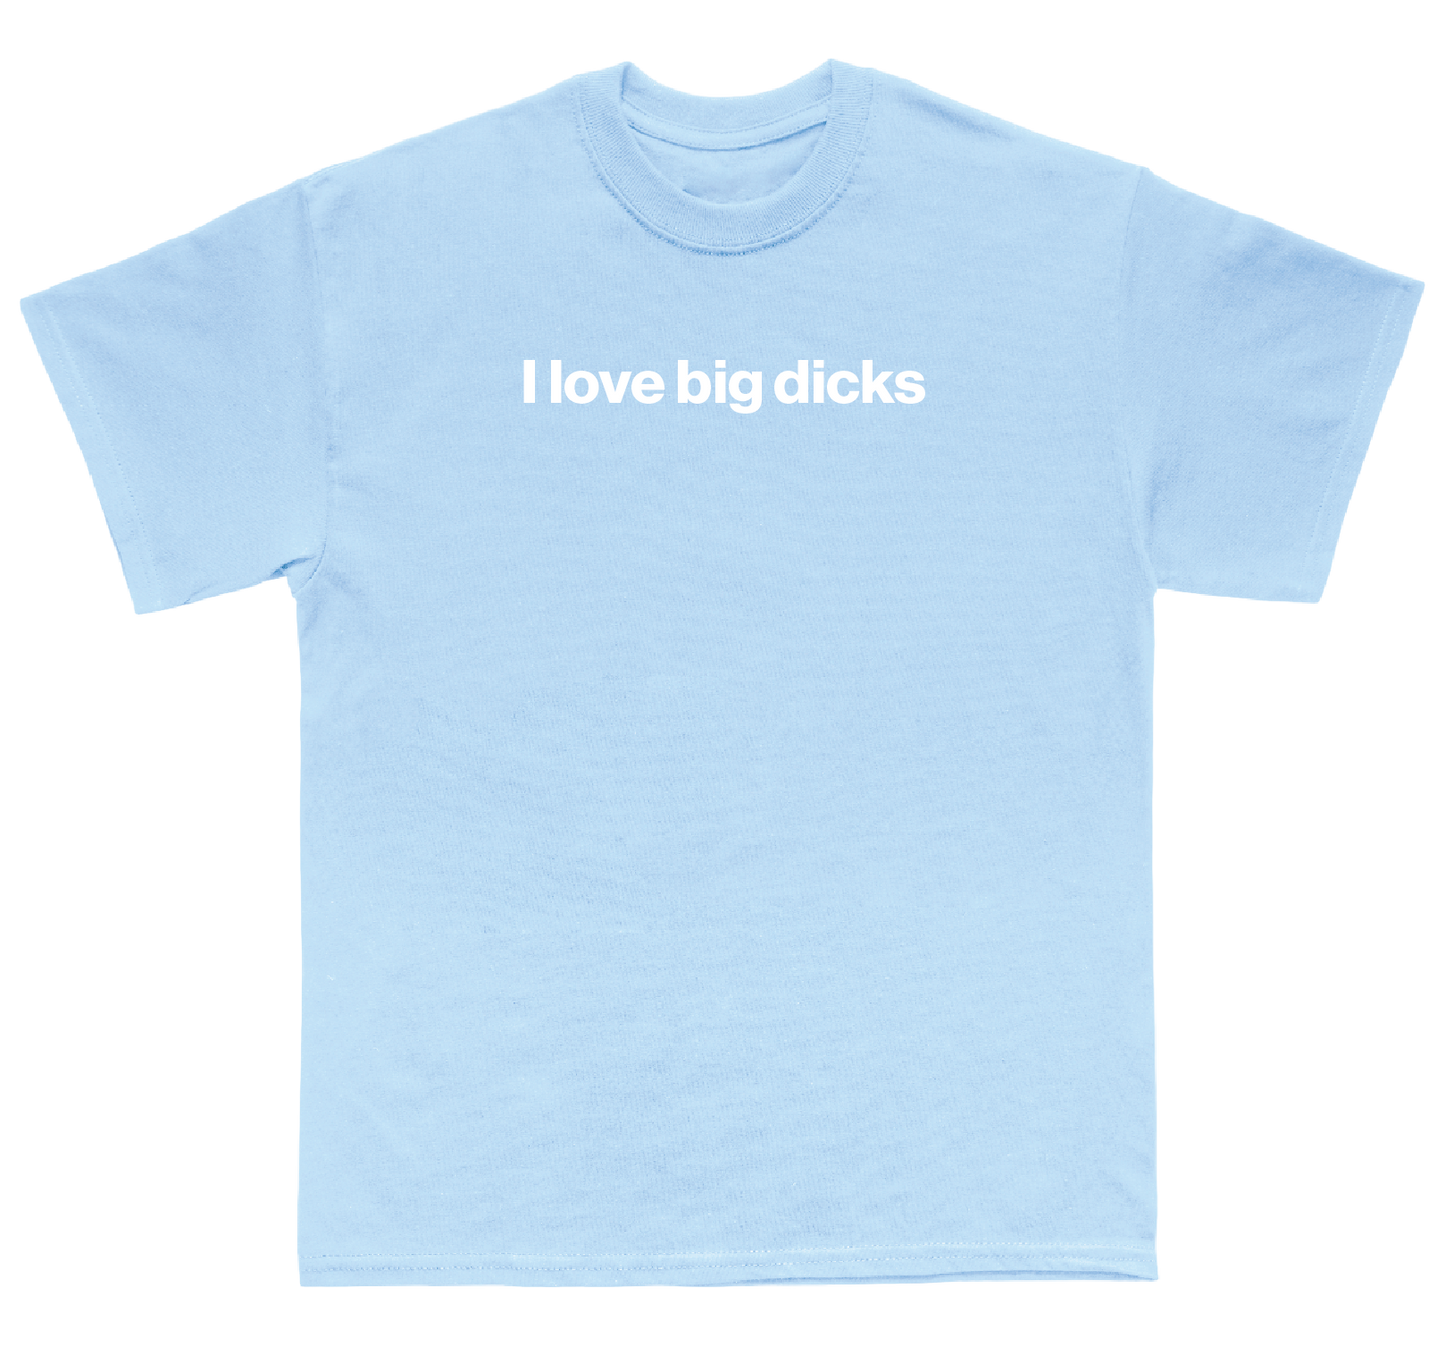 I love big dicks shirt